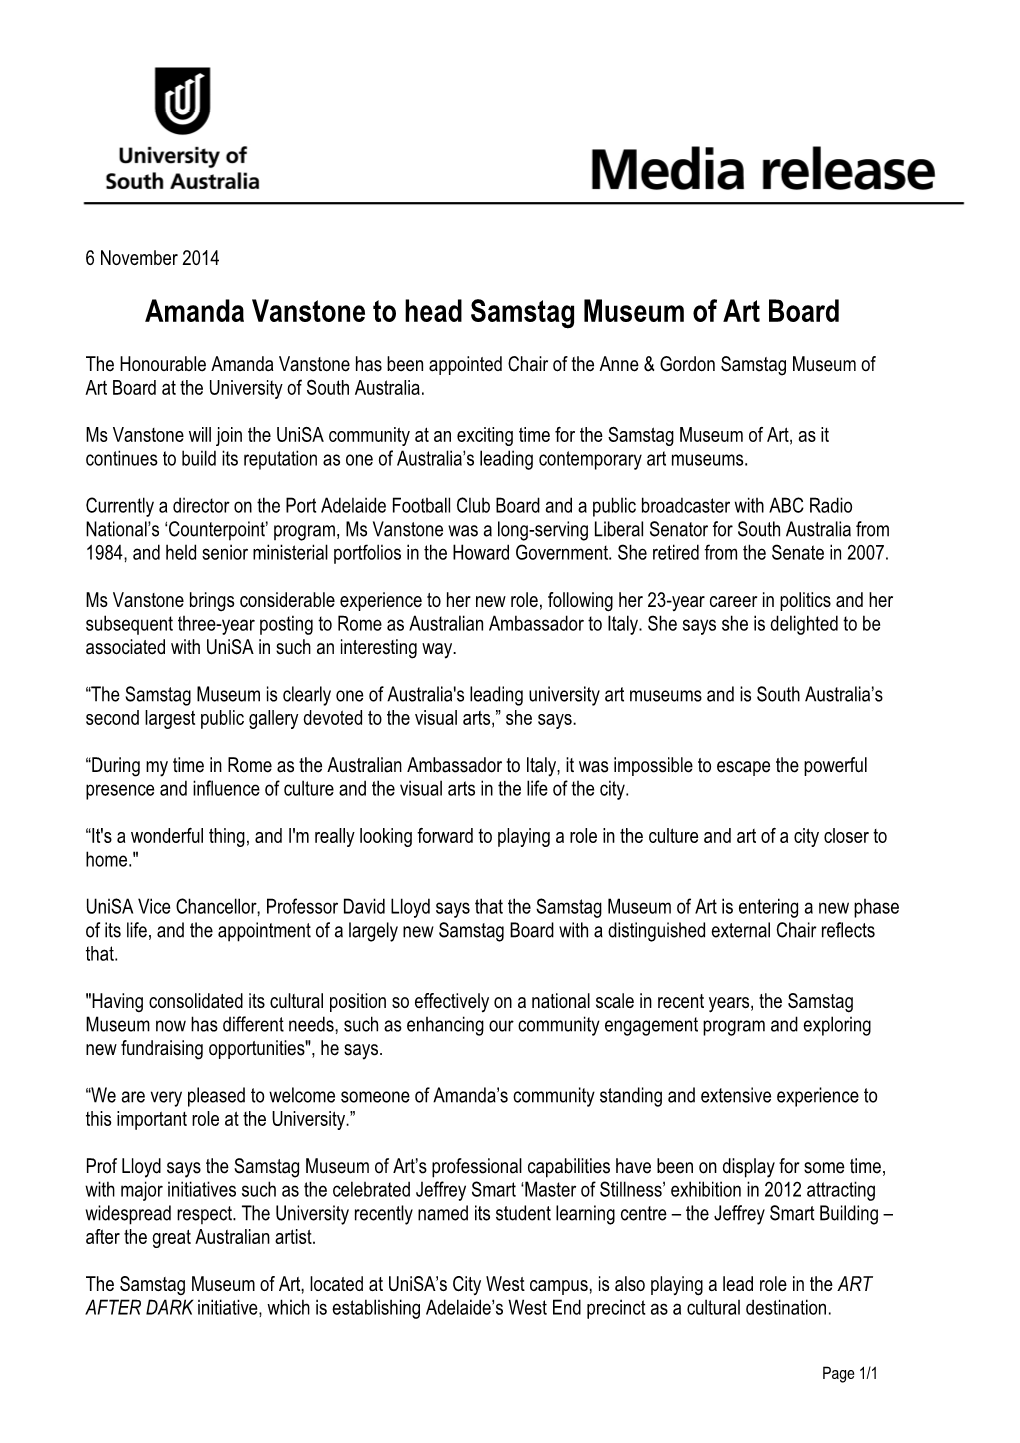 Amanda Vanstone to Head Samstag Museum of Art Board